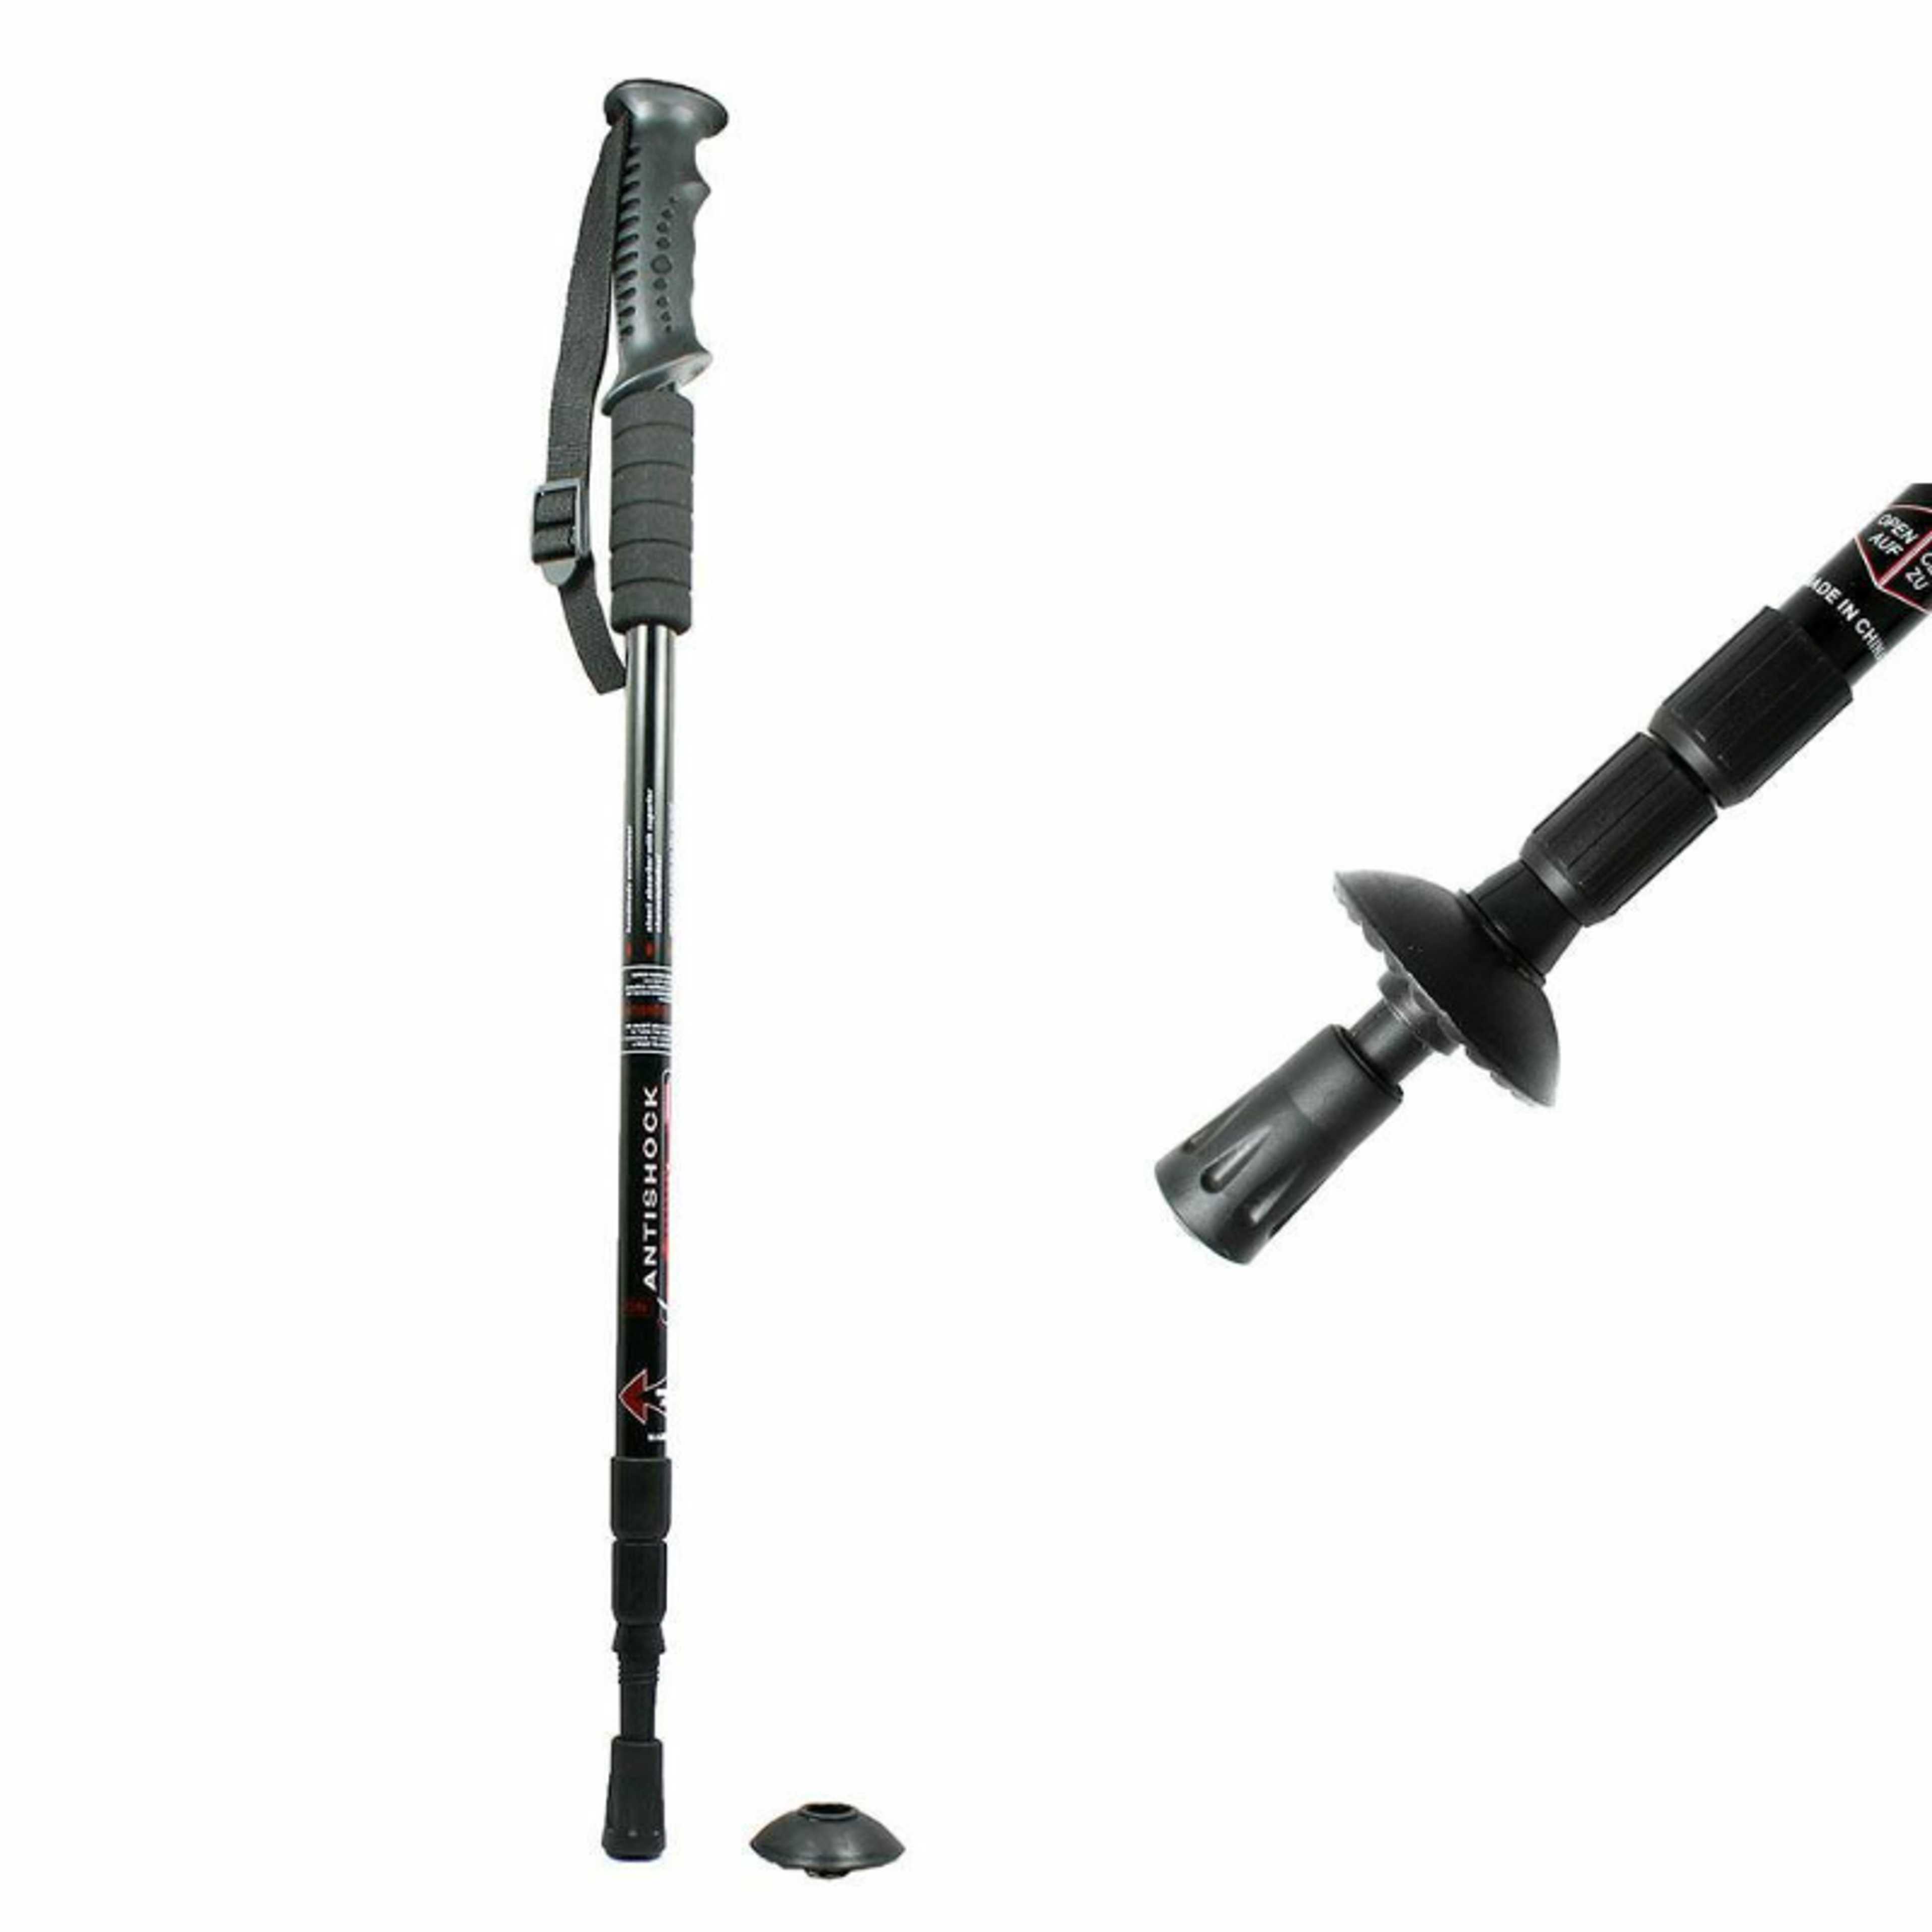 Adjustable Anti-shockk Hiking Walking Stick Mountain Warehouse Compact Walking Pole - 235g, Compact Hiking Stick-2